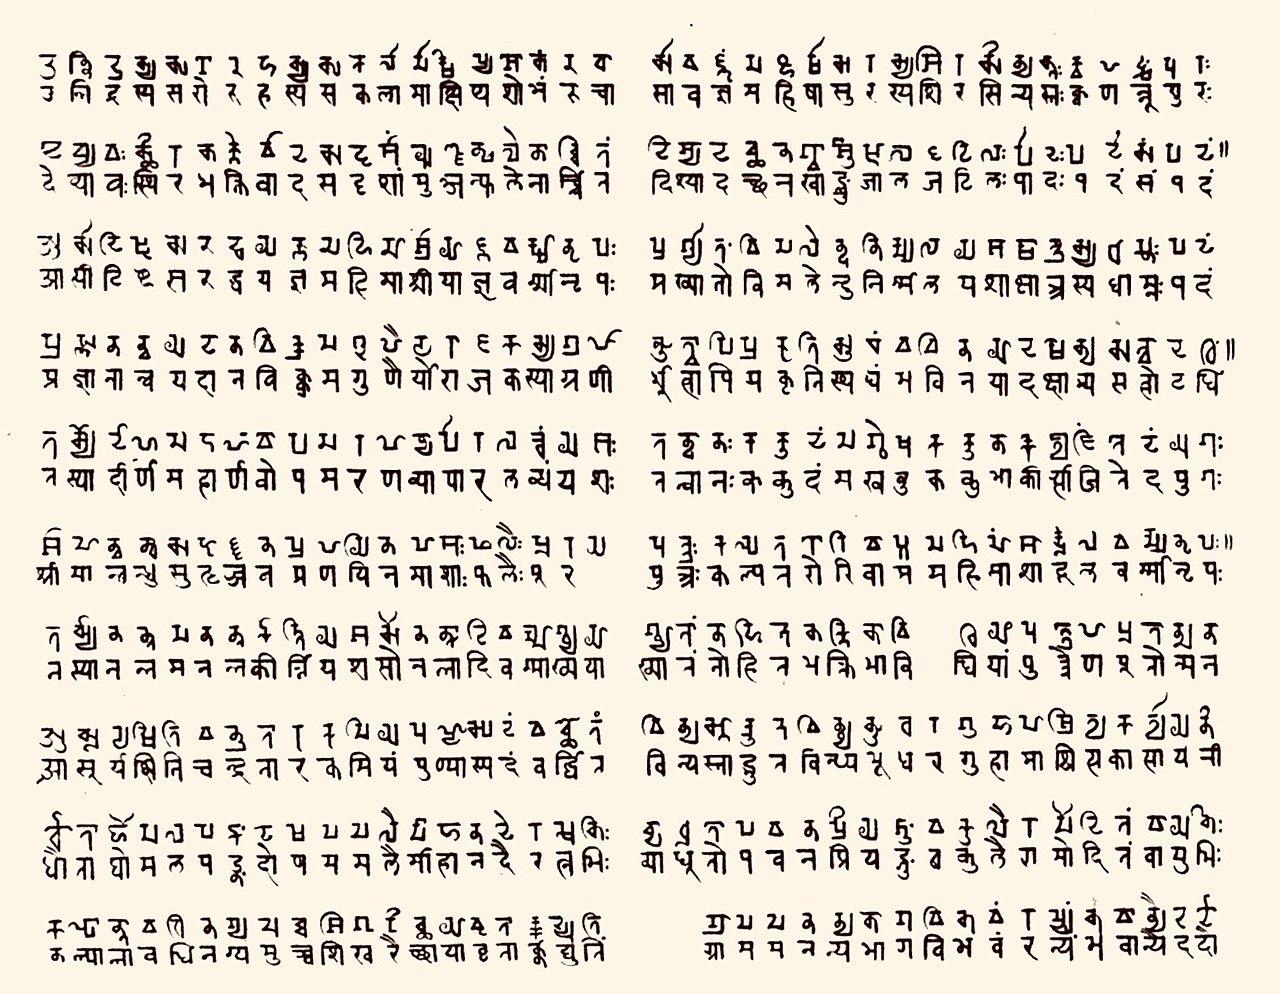 Sanskrit-Höhleninschrift der Gopika-Höhle in Gupta-Schrift über Göttin Durga - ca. 5. Jh. n. u. Z.